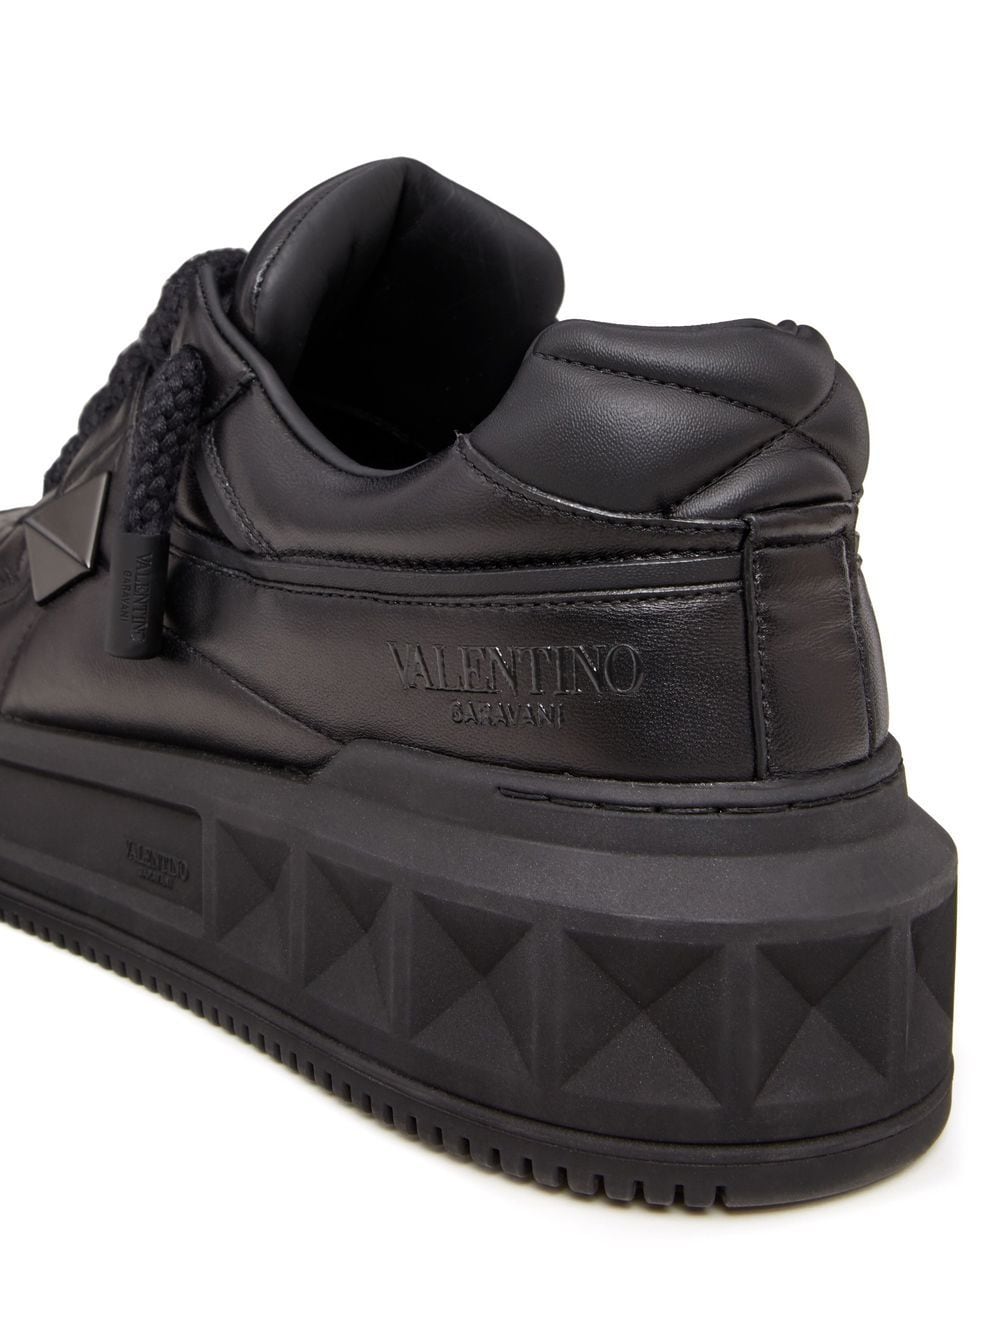 Valentino Garavani Sneakers Black